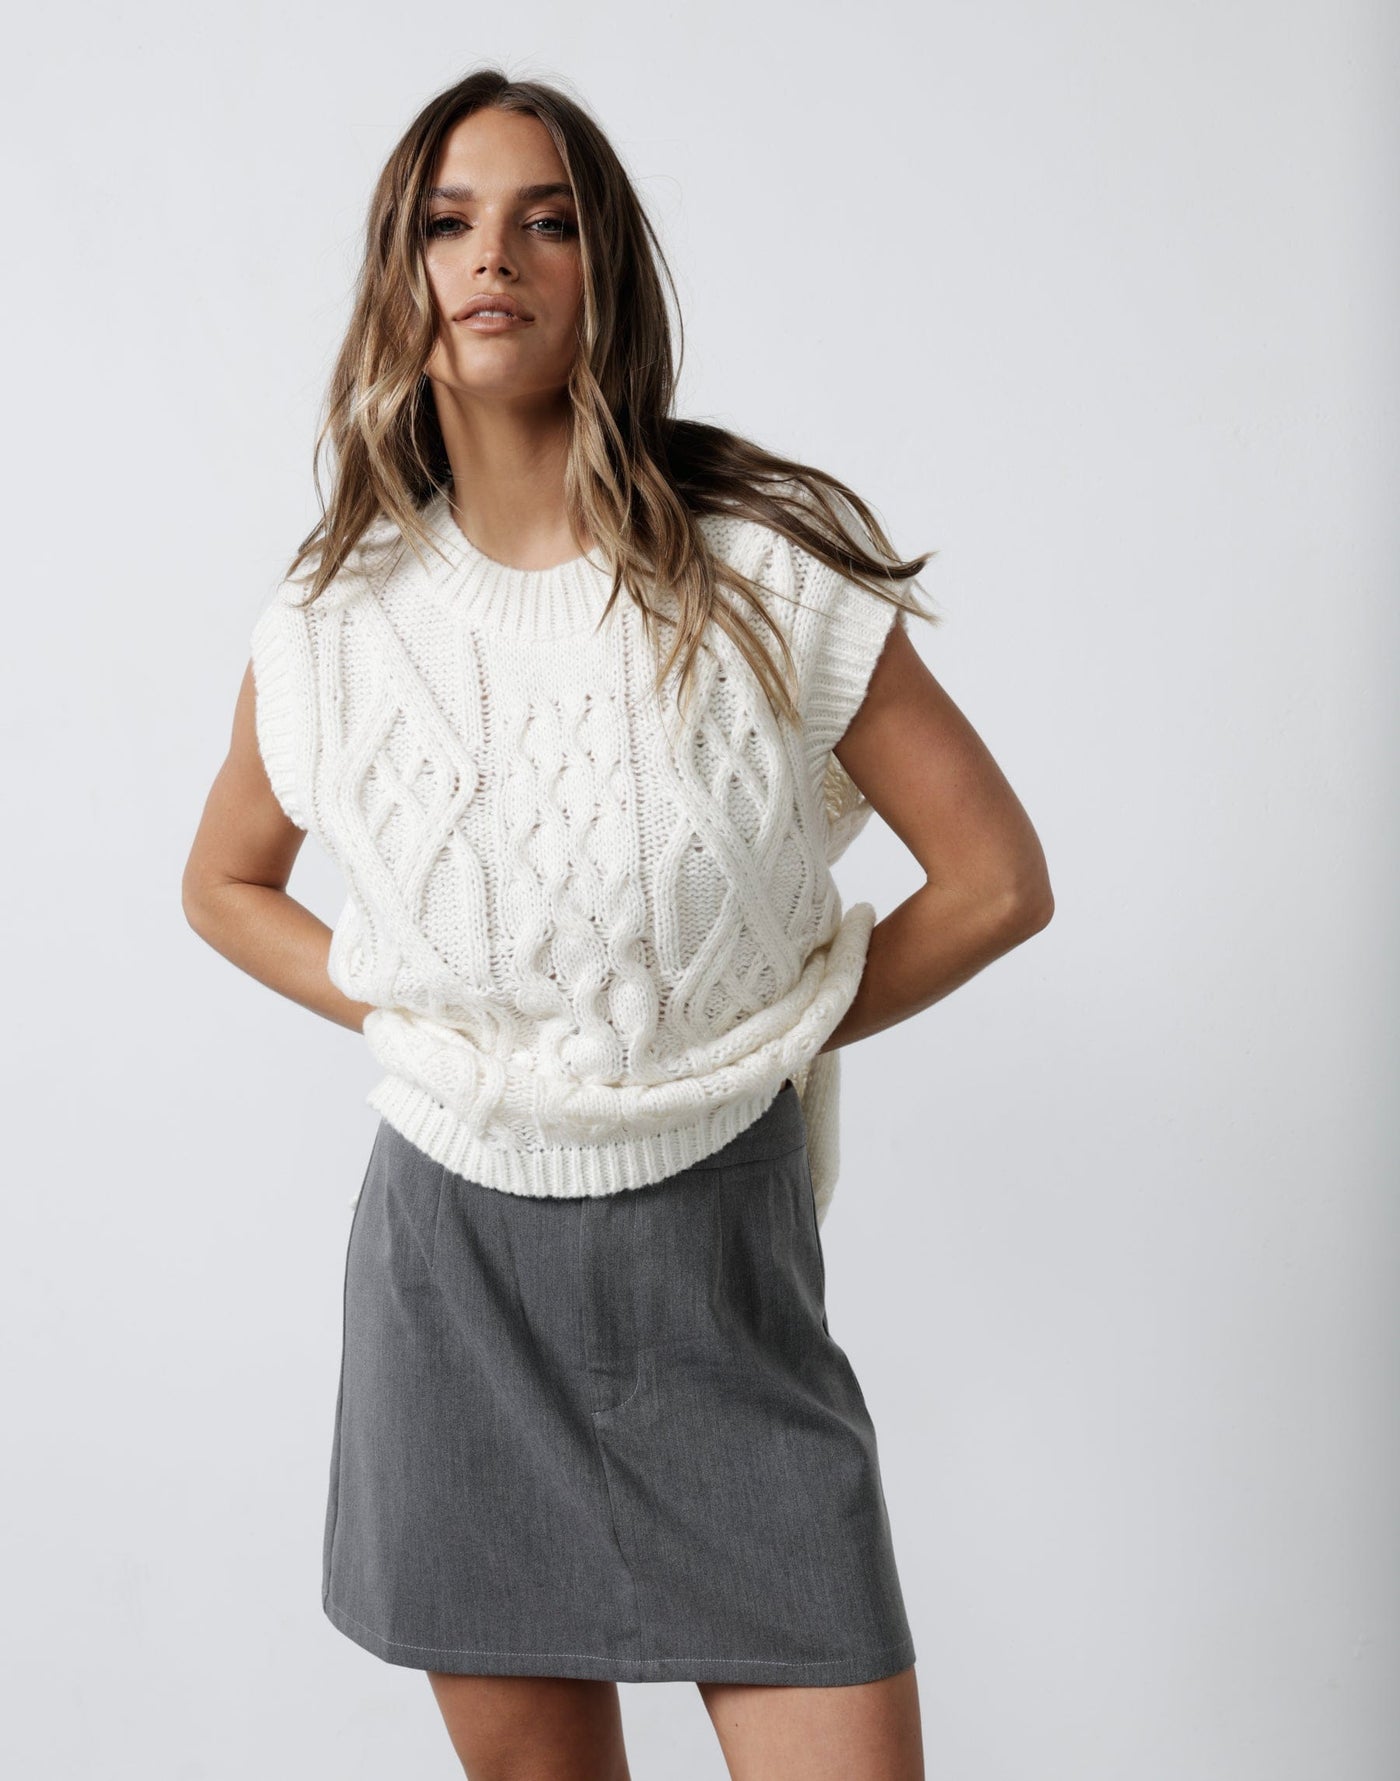 Eero Vest Top (Cream) - Cable Knit Vest Top - Women's Top - Charcoal Clothing